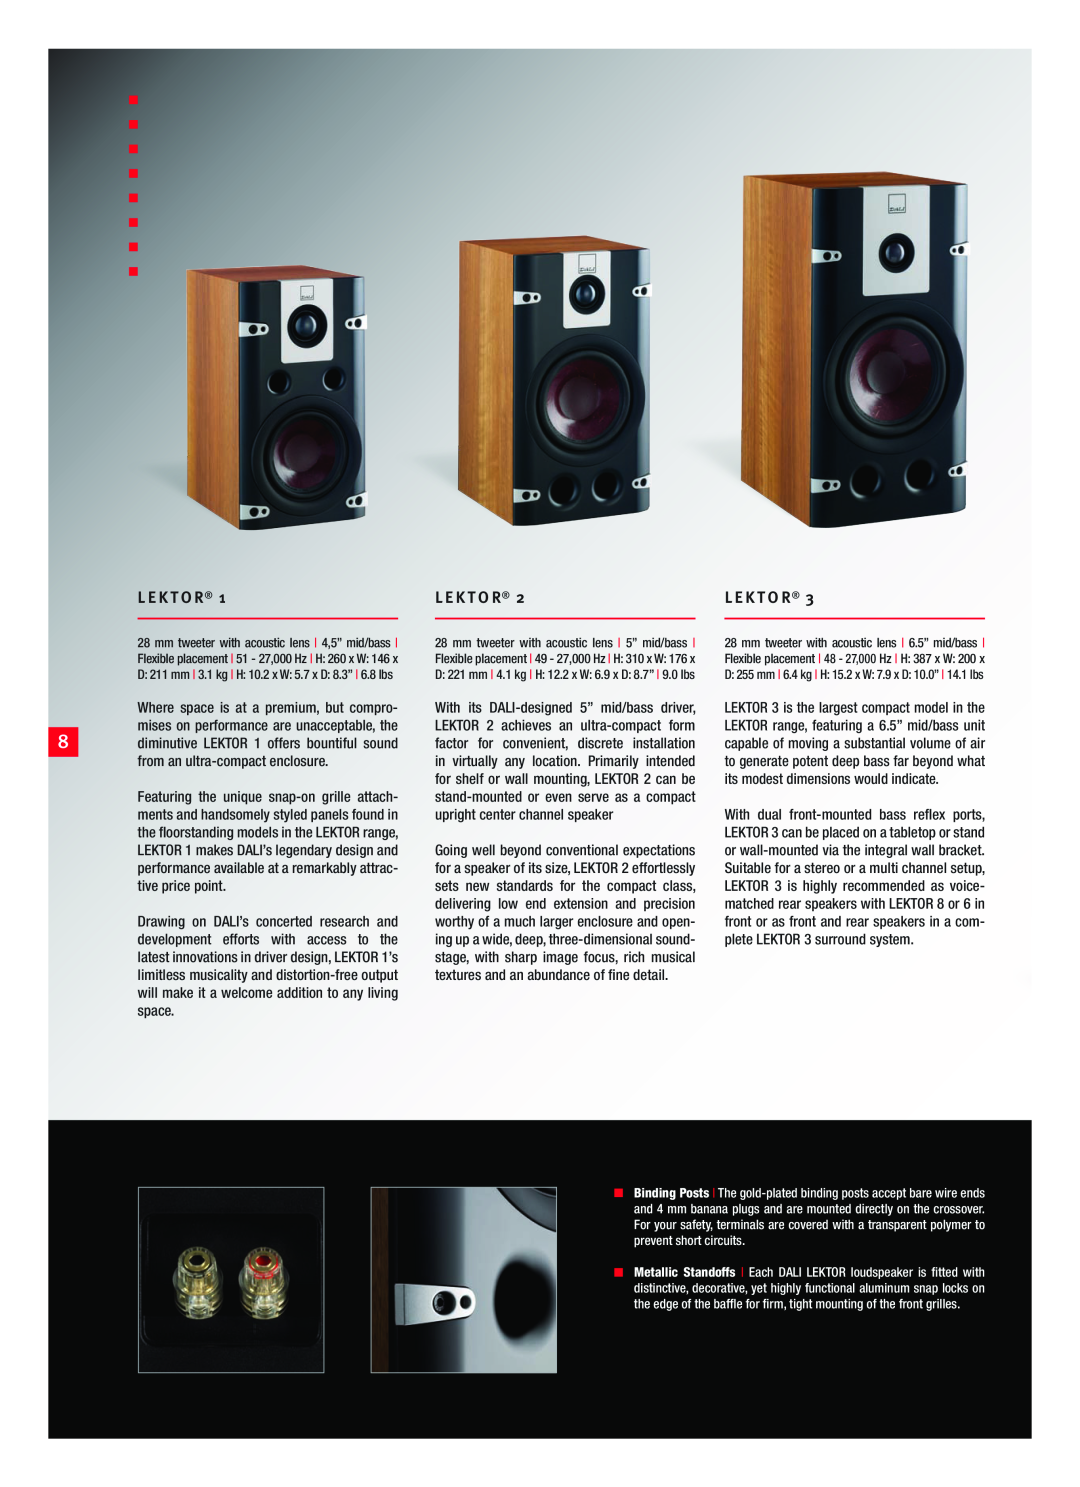 DALI Loudspeakers Lektor manual L E K T O R, mm tweeter with acoustic lens | 5” mid/bass 